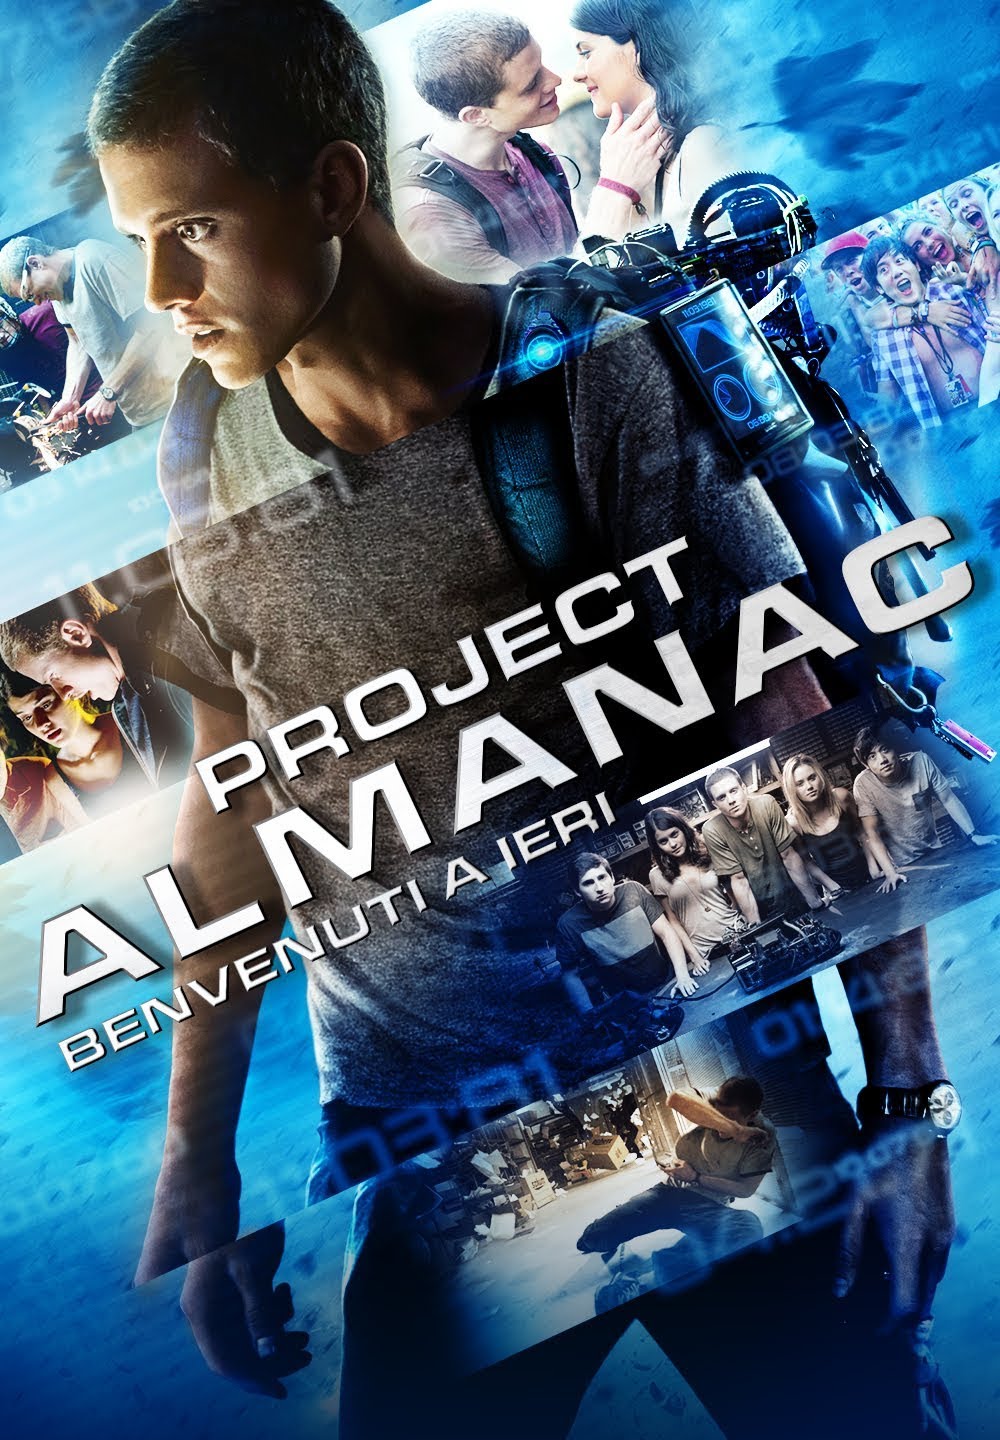 Project Almanac – Benvenuti a ieri [HD] (2015)